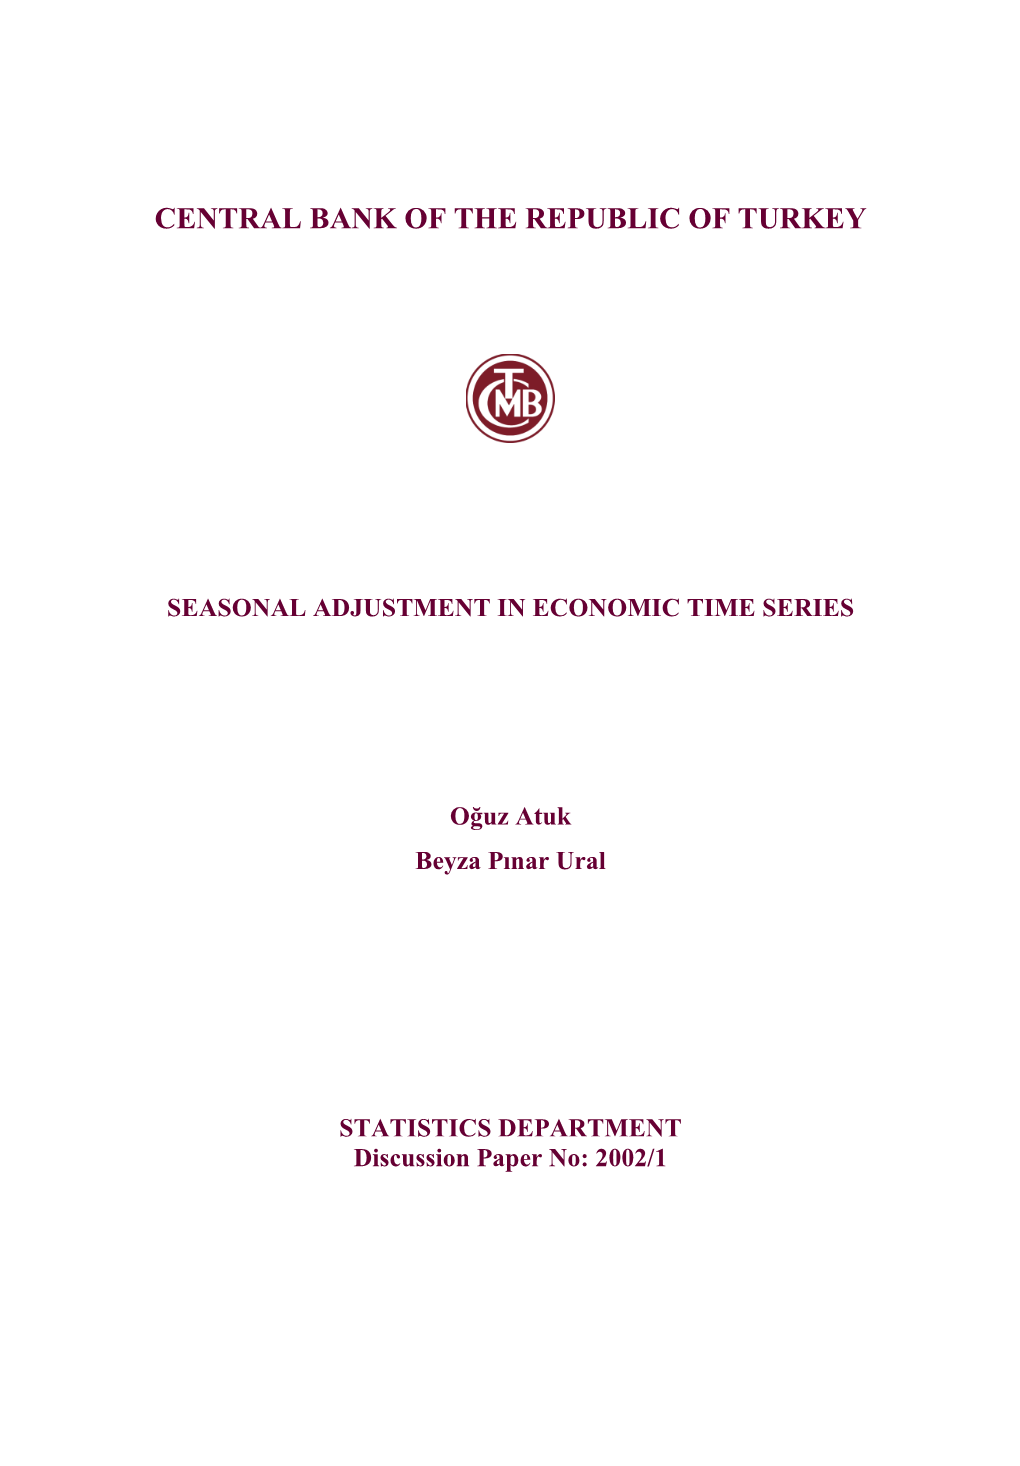 Seasonal Adjustment Methods: an Application to the Turkish Monetary Aggregates